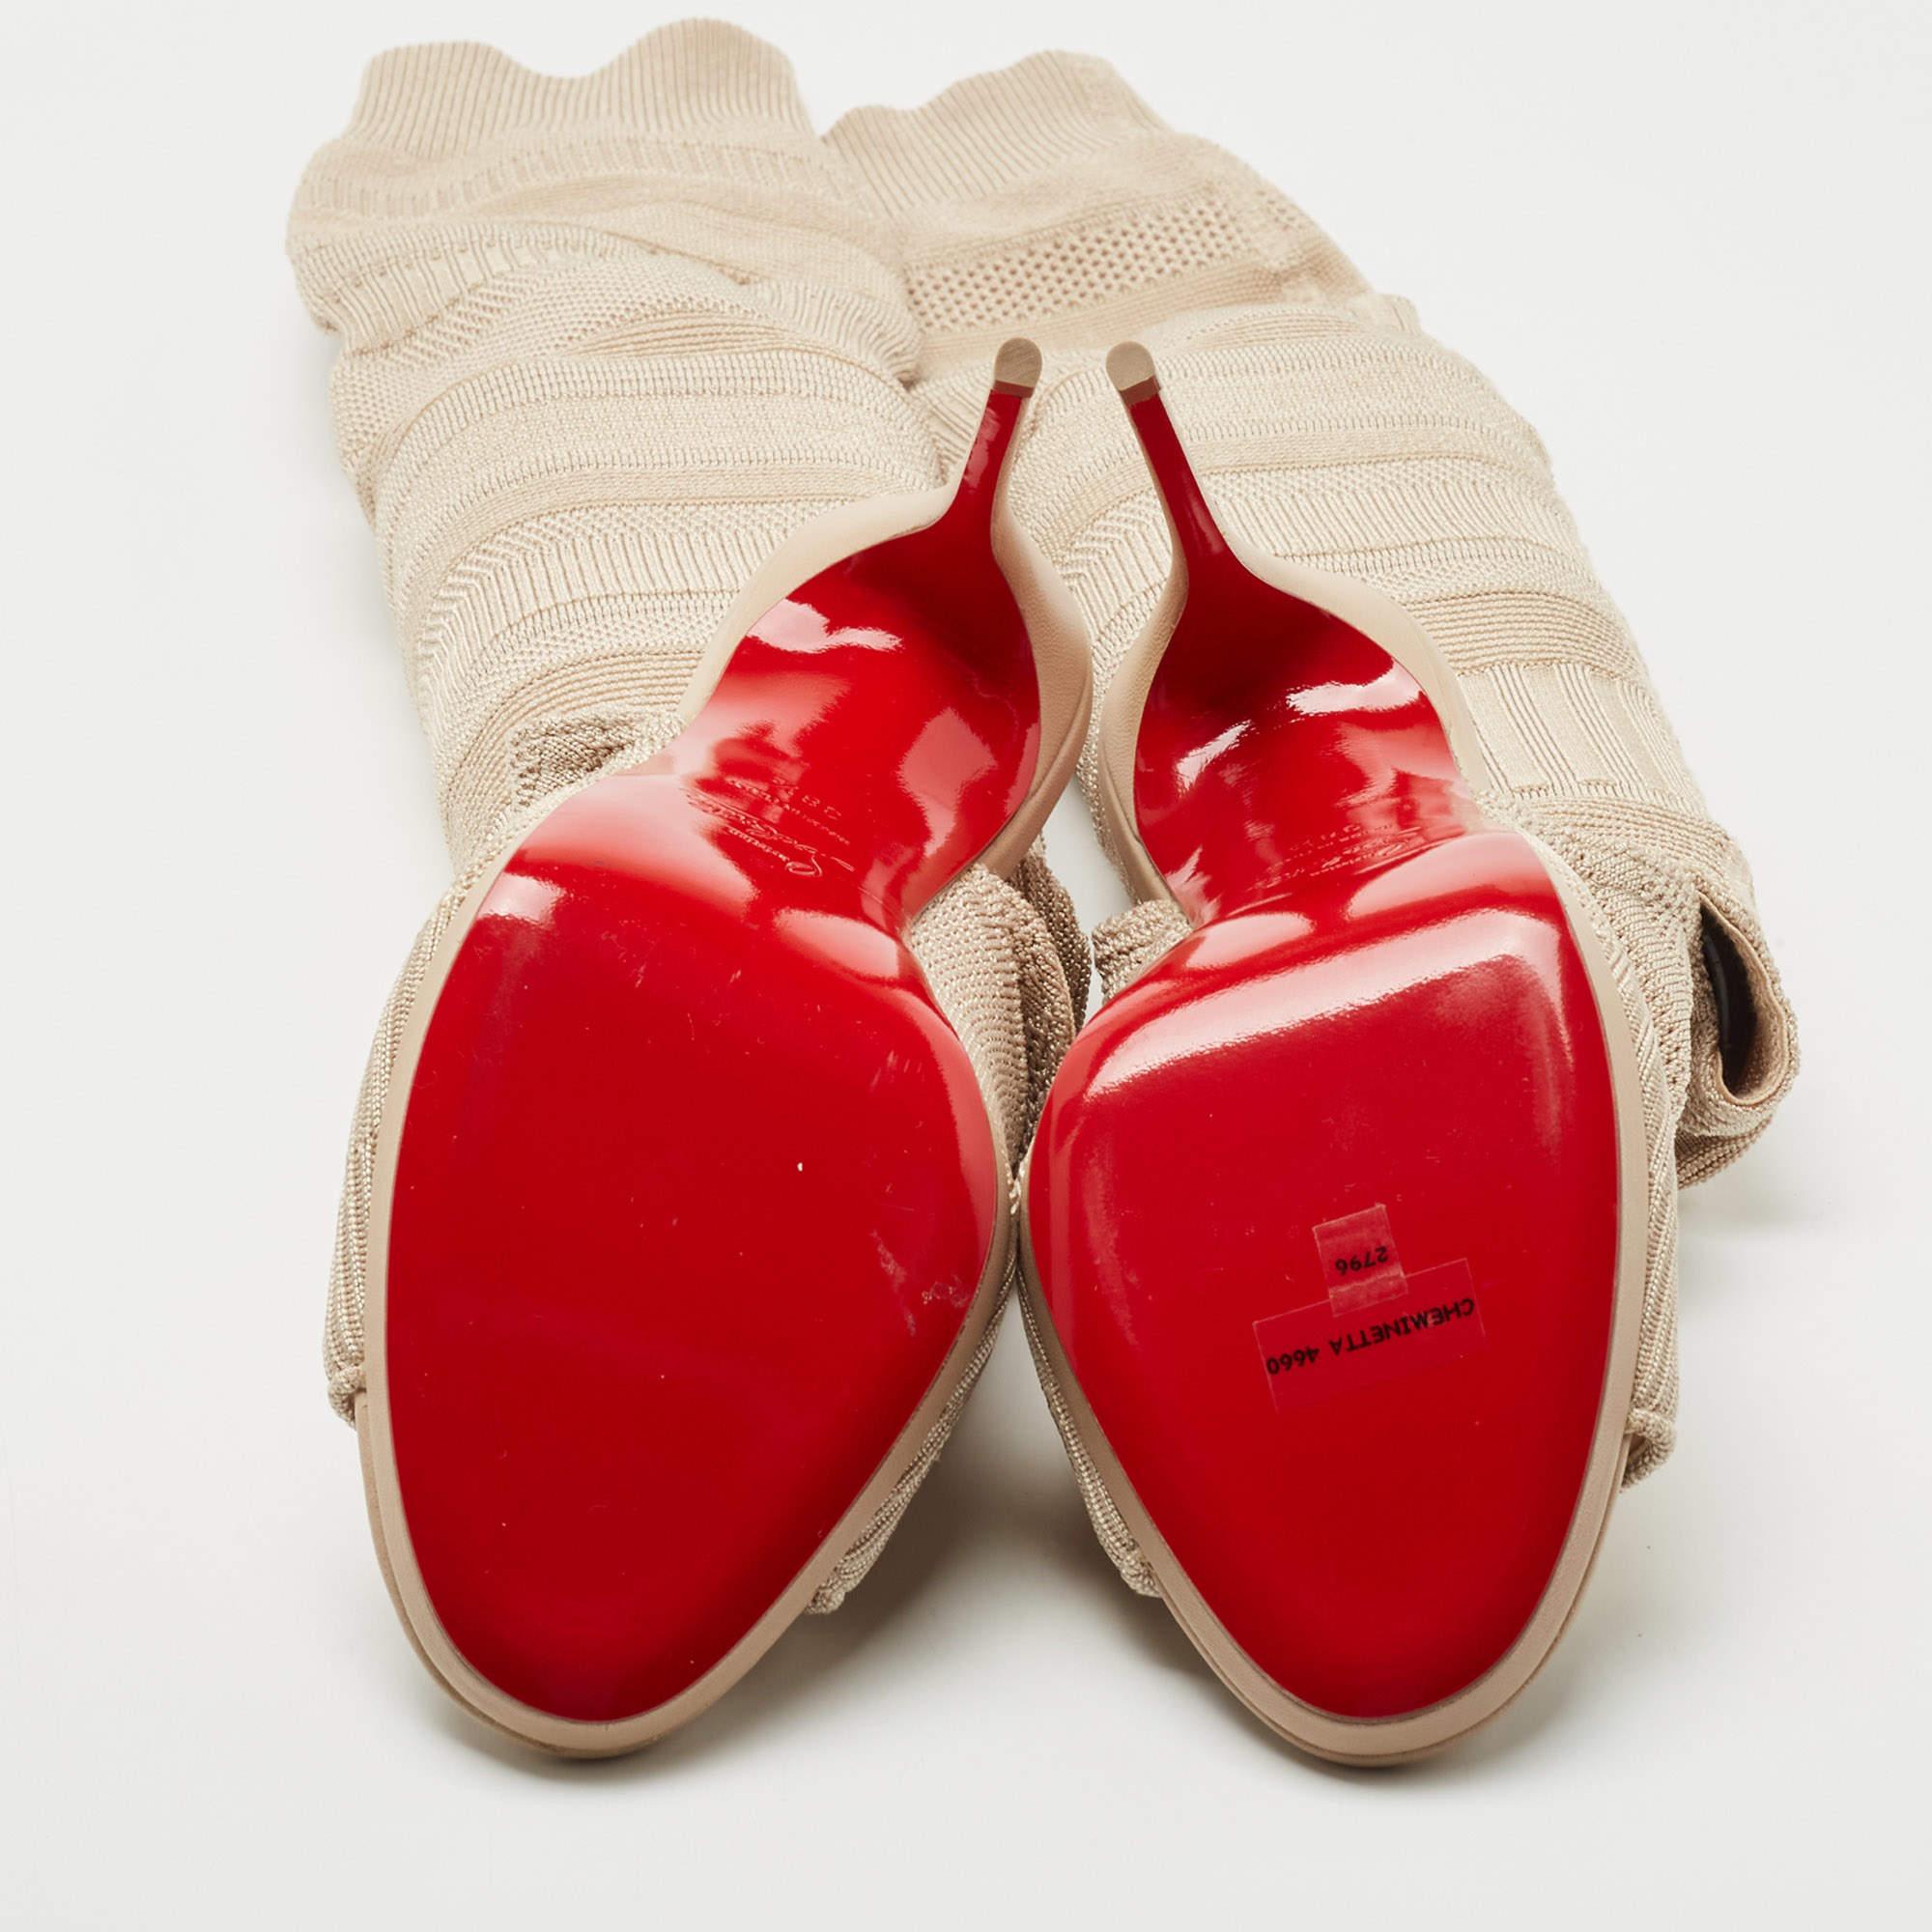 Christian Louboutin Beige Knit Fabric Cheminetta Boots Size 38.5 4